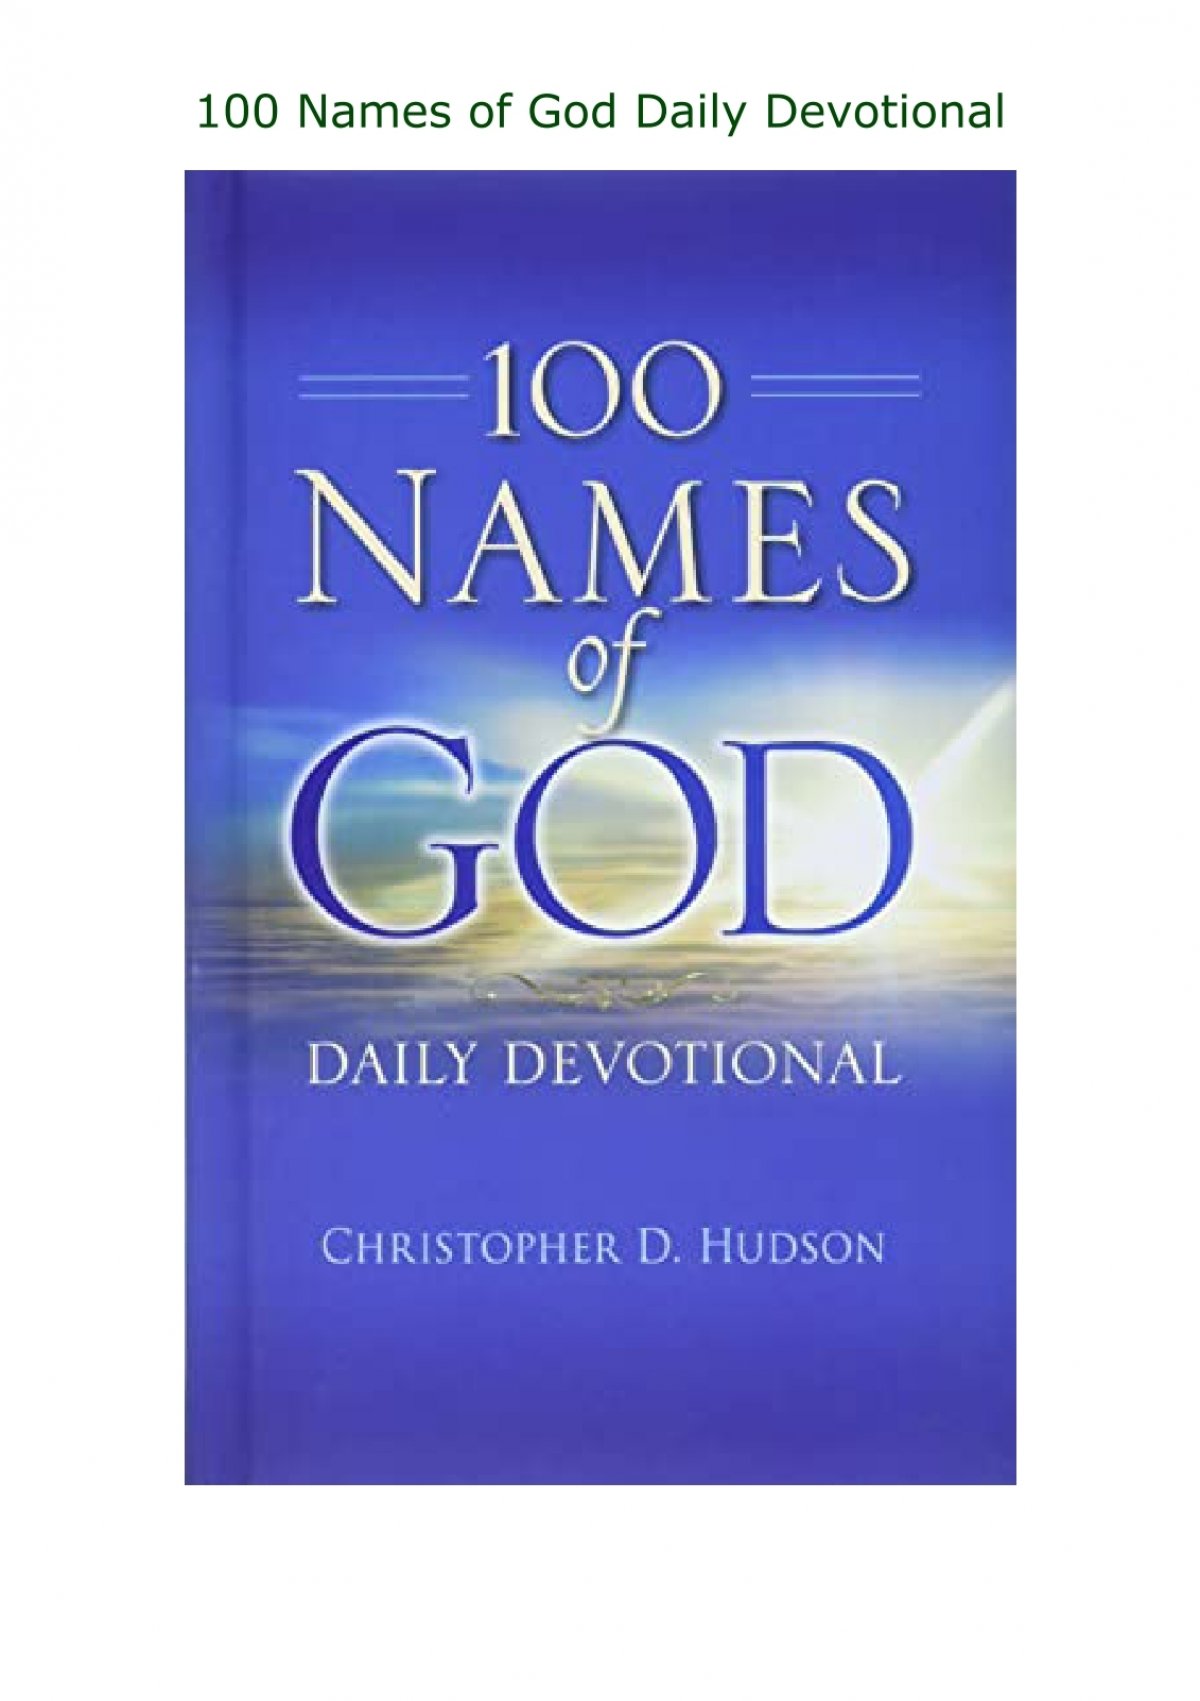 pdf-100-names-of-god-daily-devotional